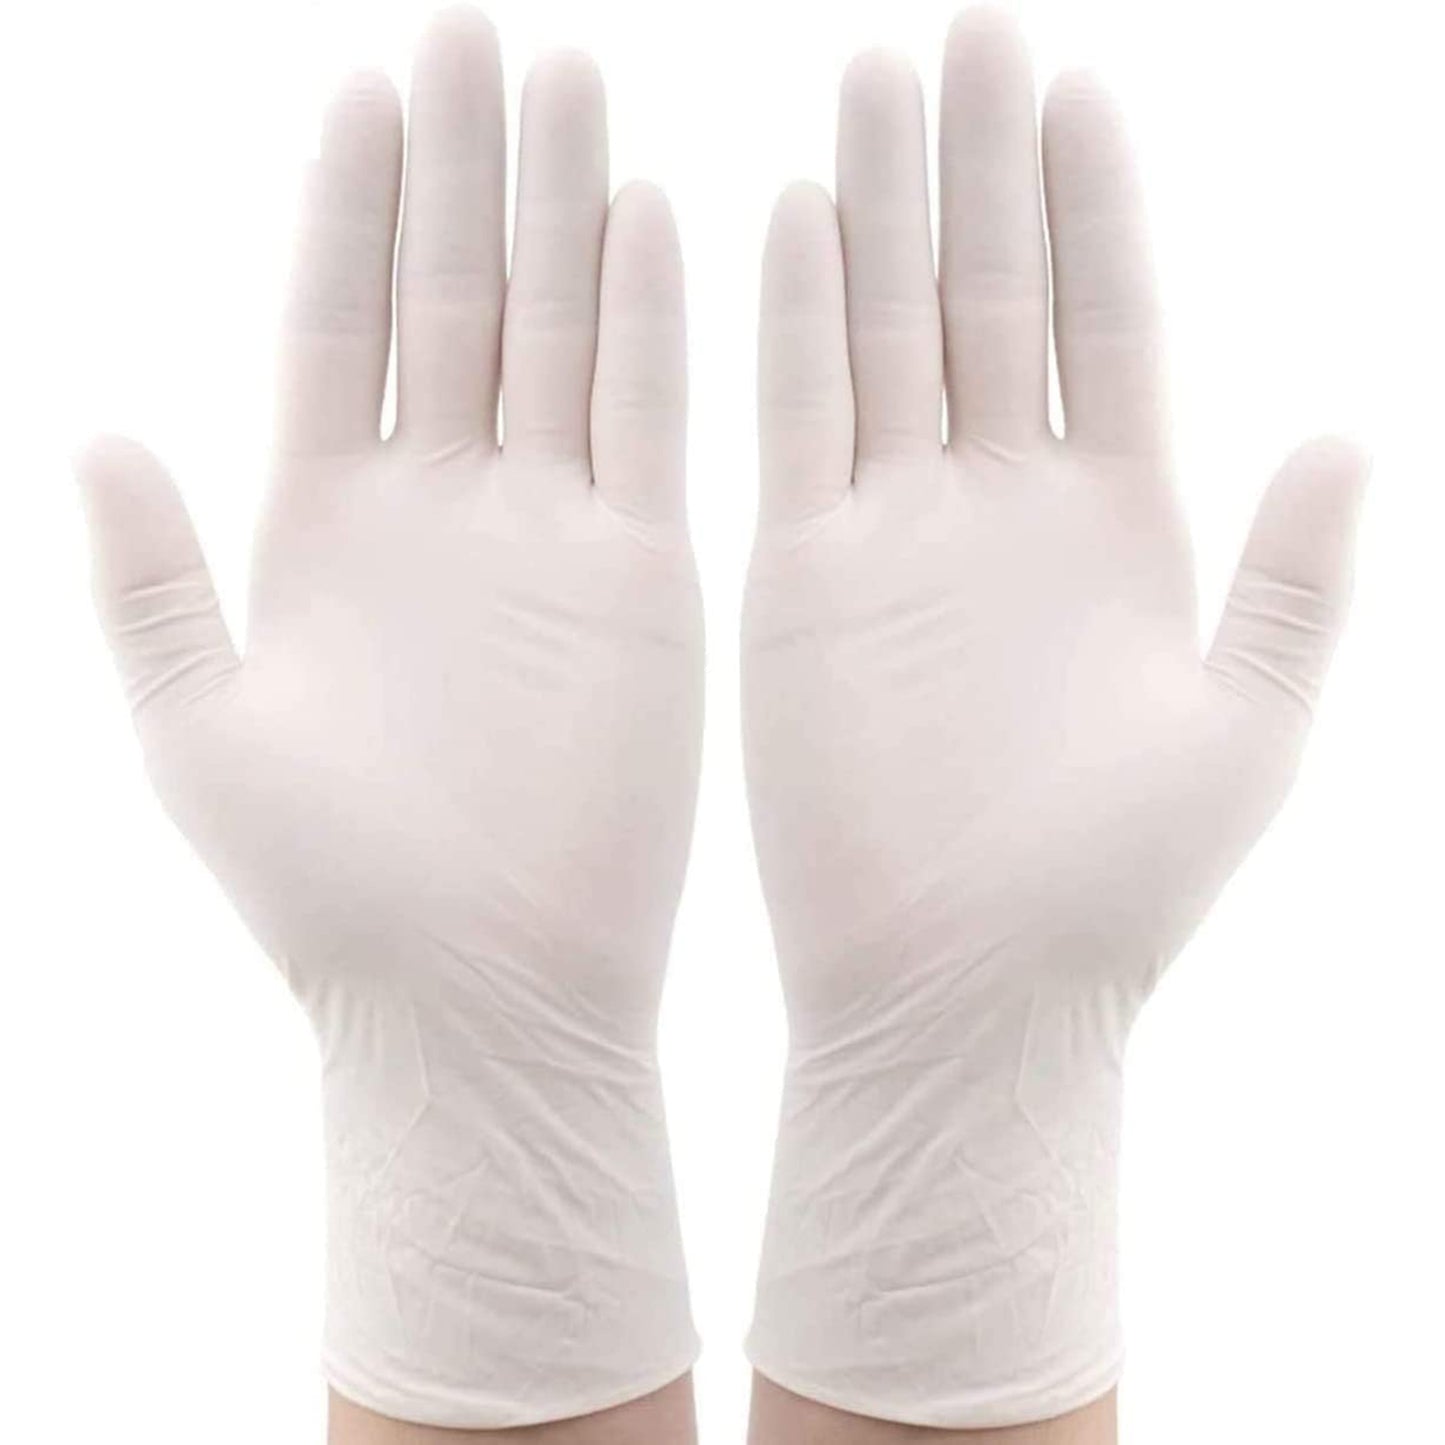 50pc Vinyl Gloves Powder Free One Size White Gloves Nicole Collection   